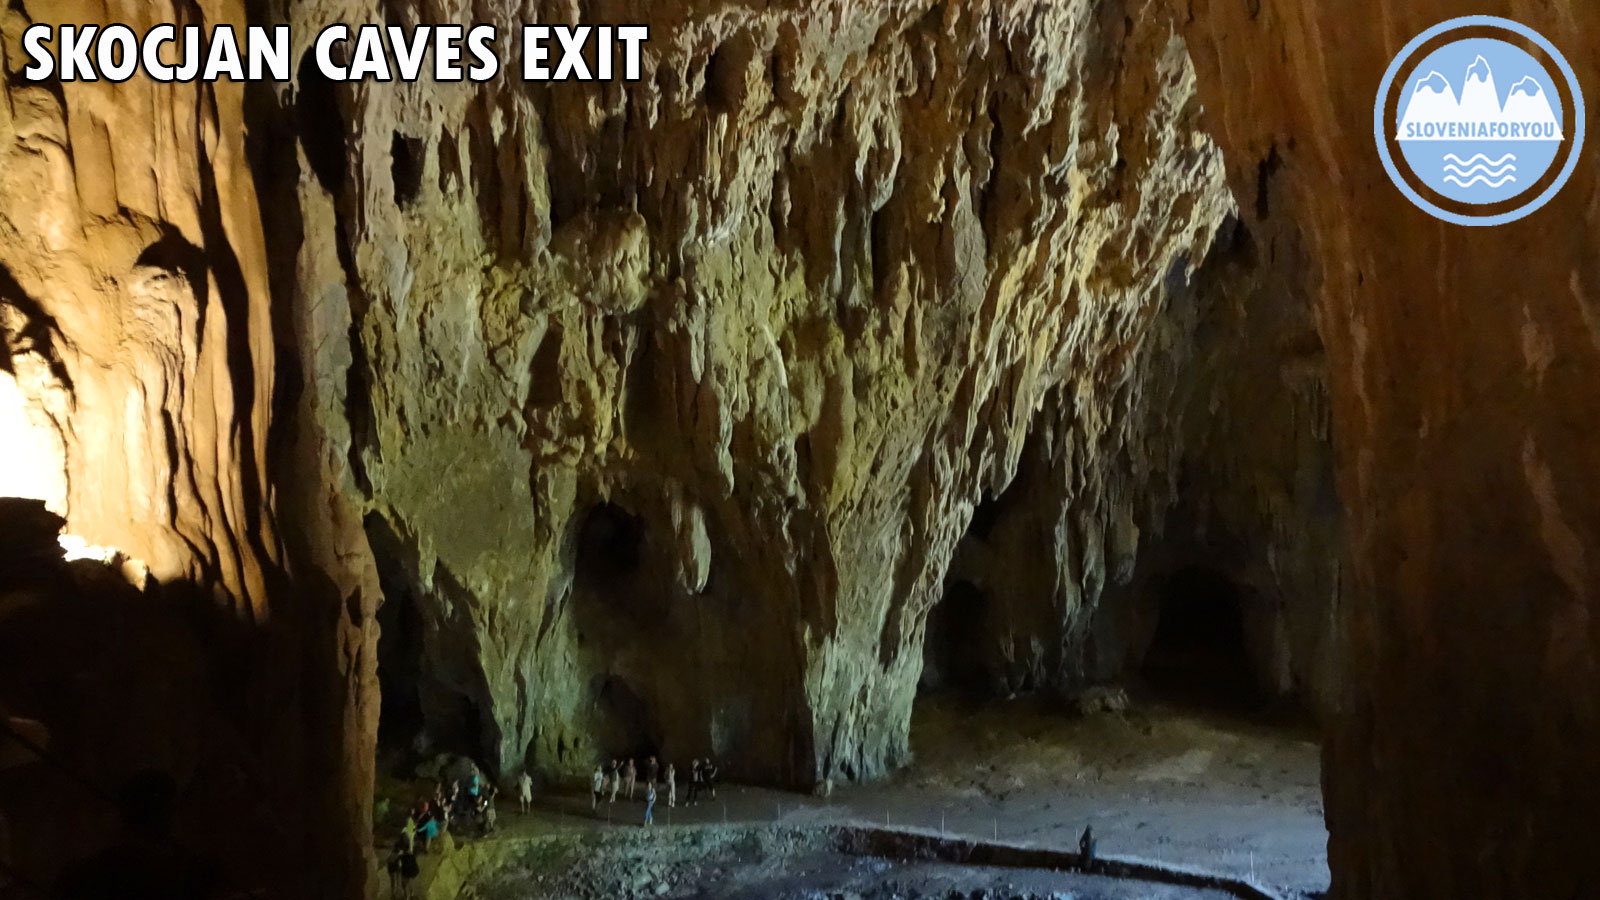 Škocjan Caves Exit - Sloveniaforyou